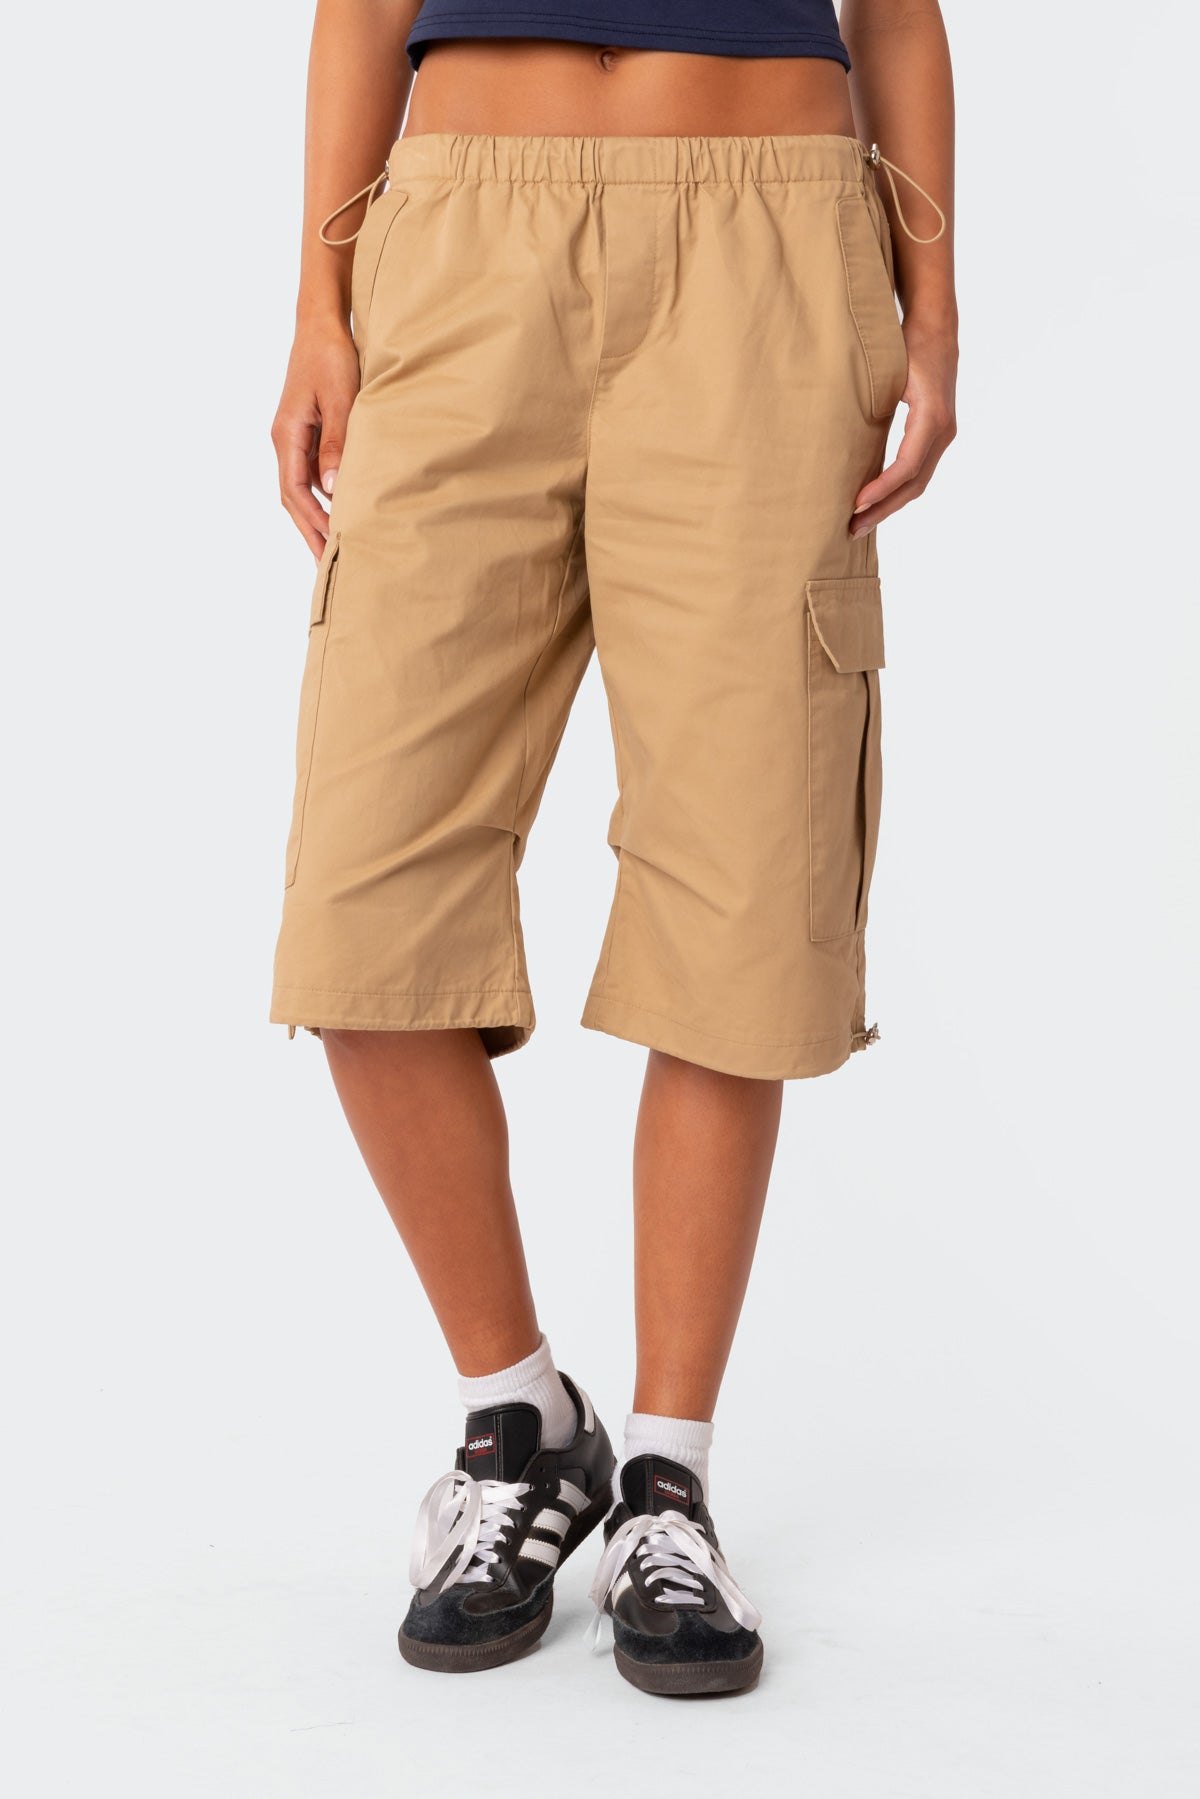 Bermuda Pocket Shorts